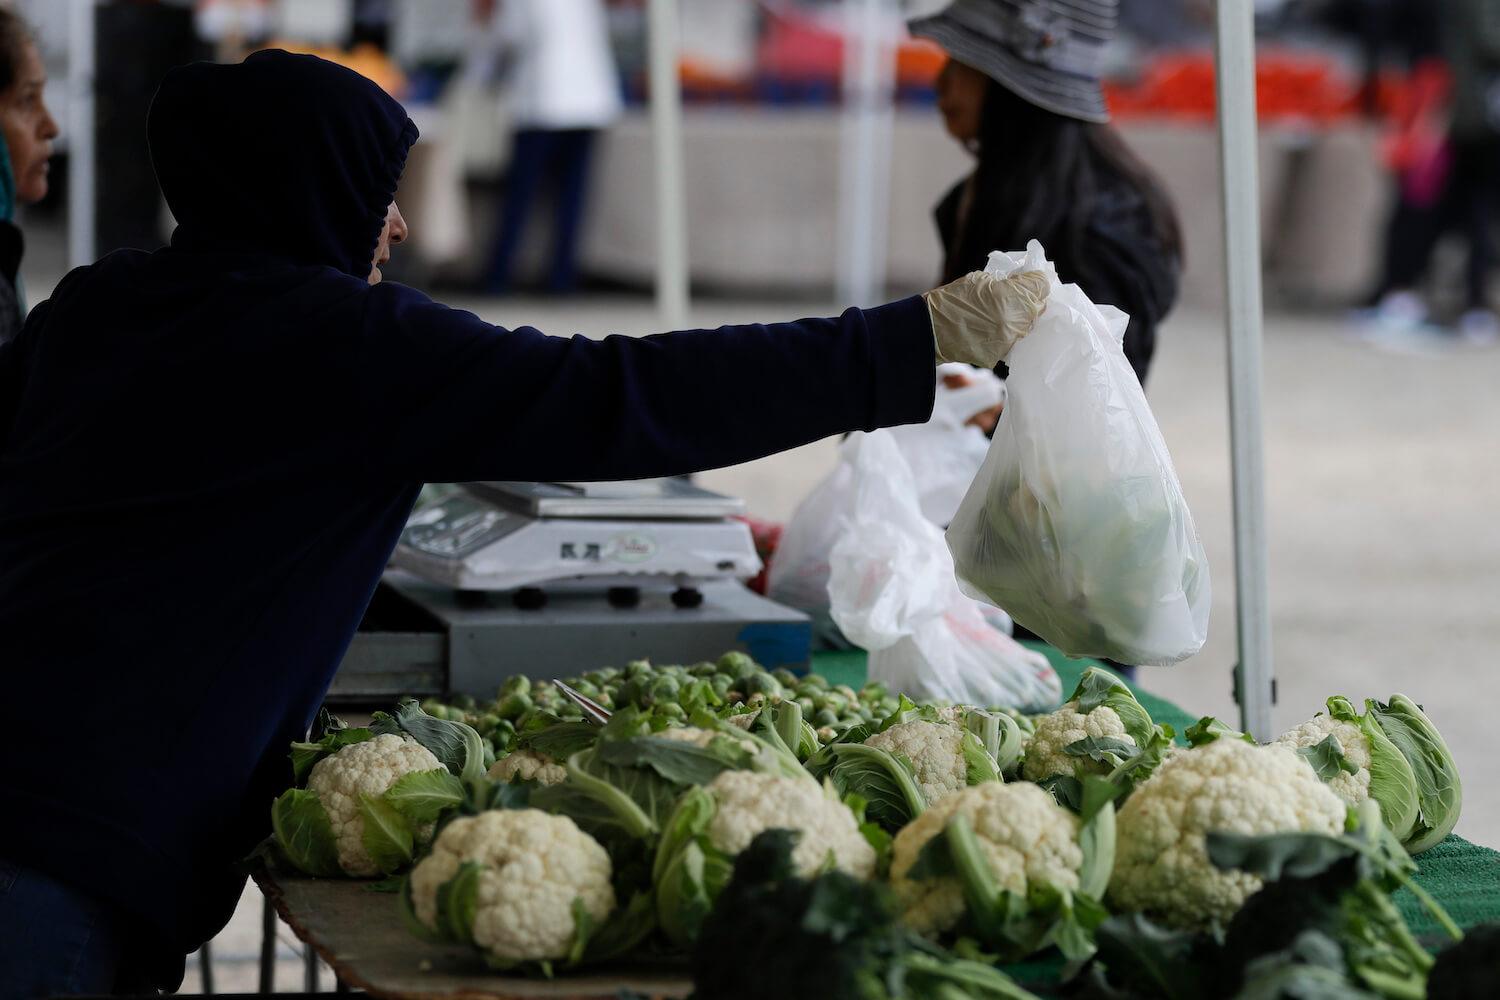 CA farmers market vendor with gloves bagging cauliflower covid-19 March 2020